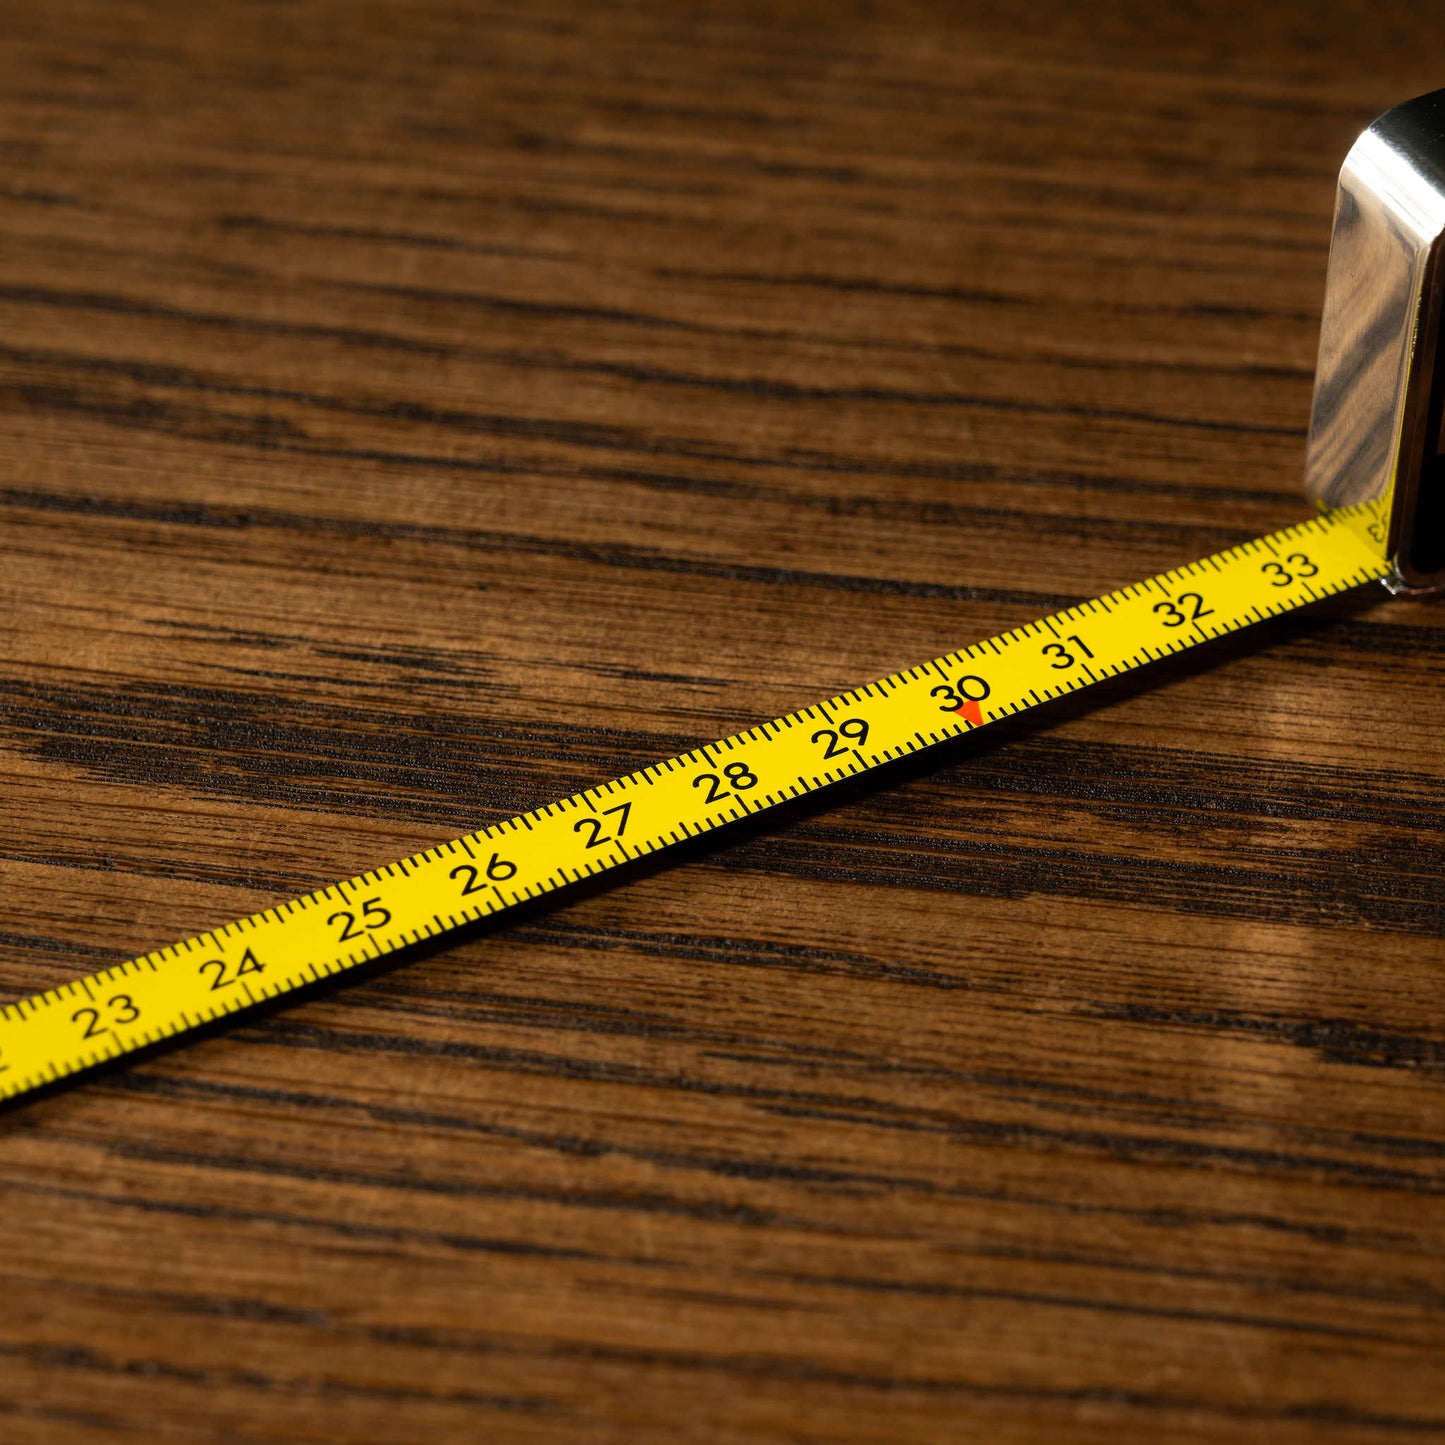 Measuring Tape Scale of Penco Pocket Tape Measure